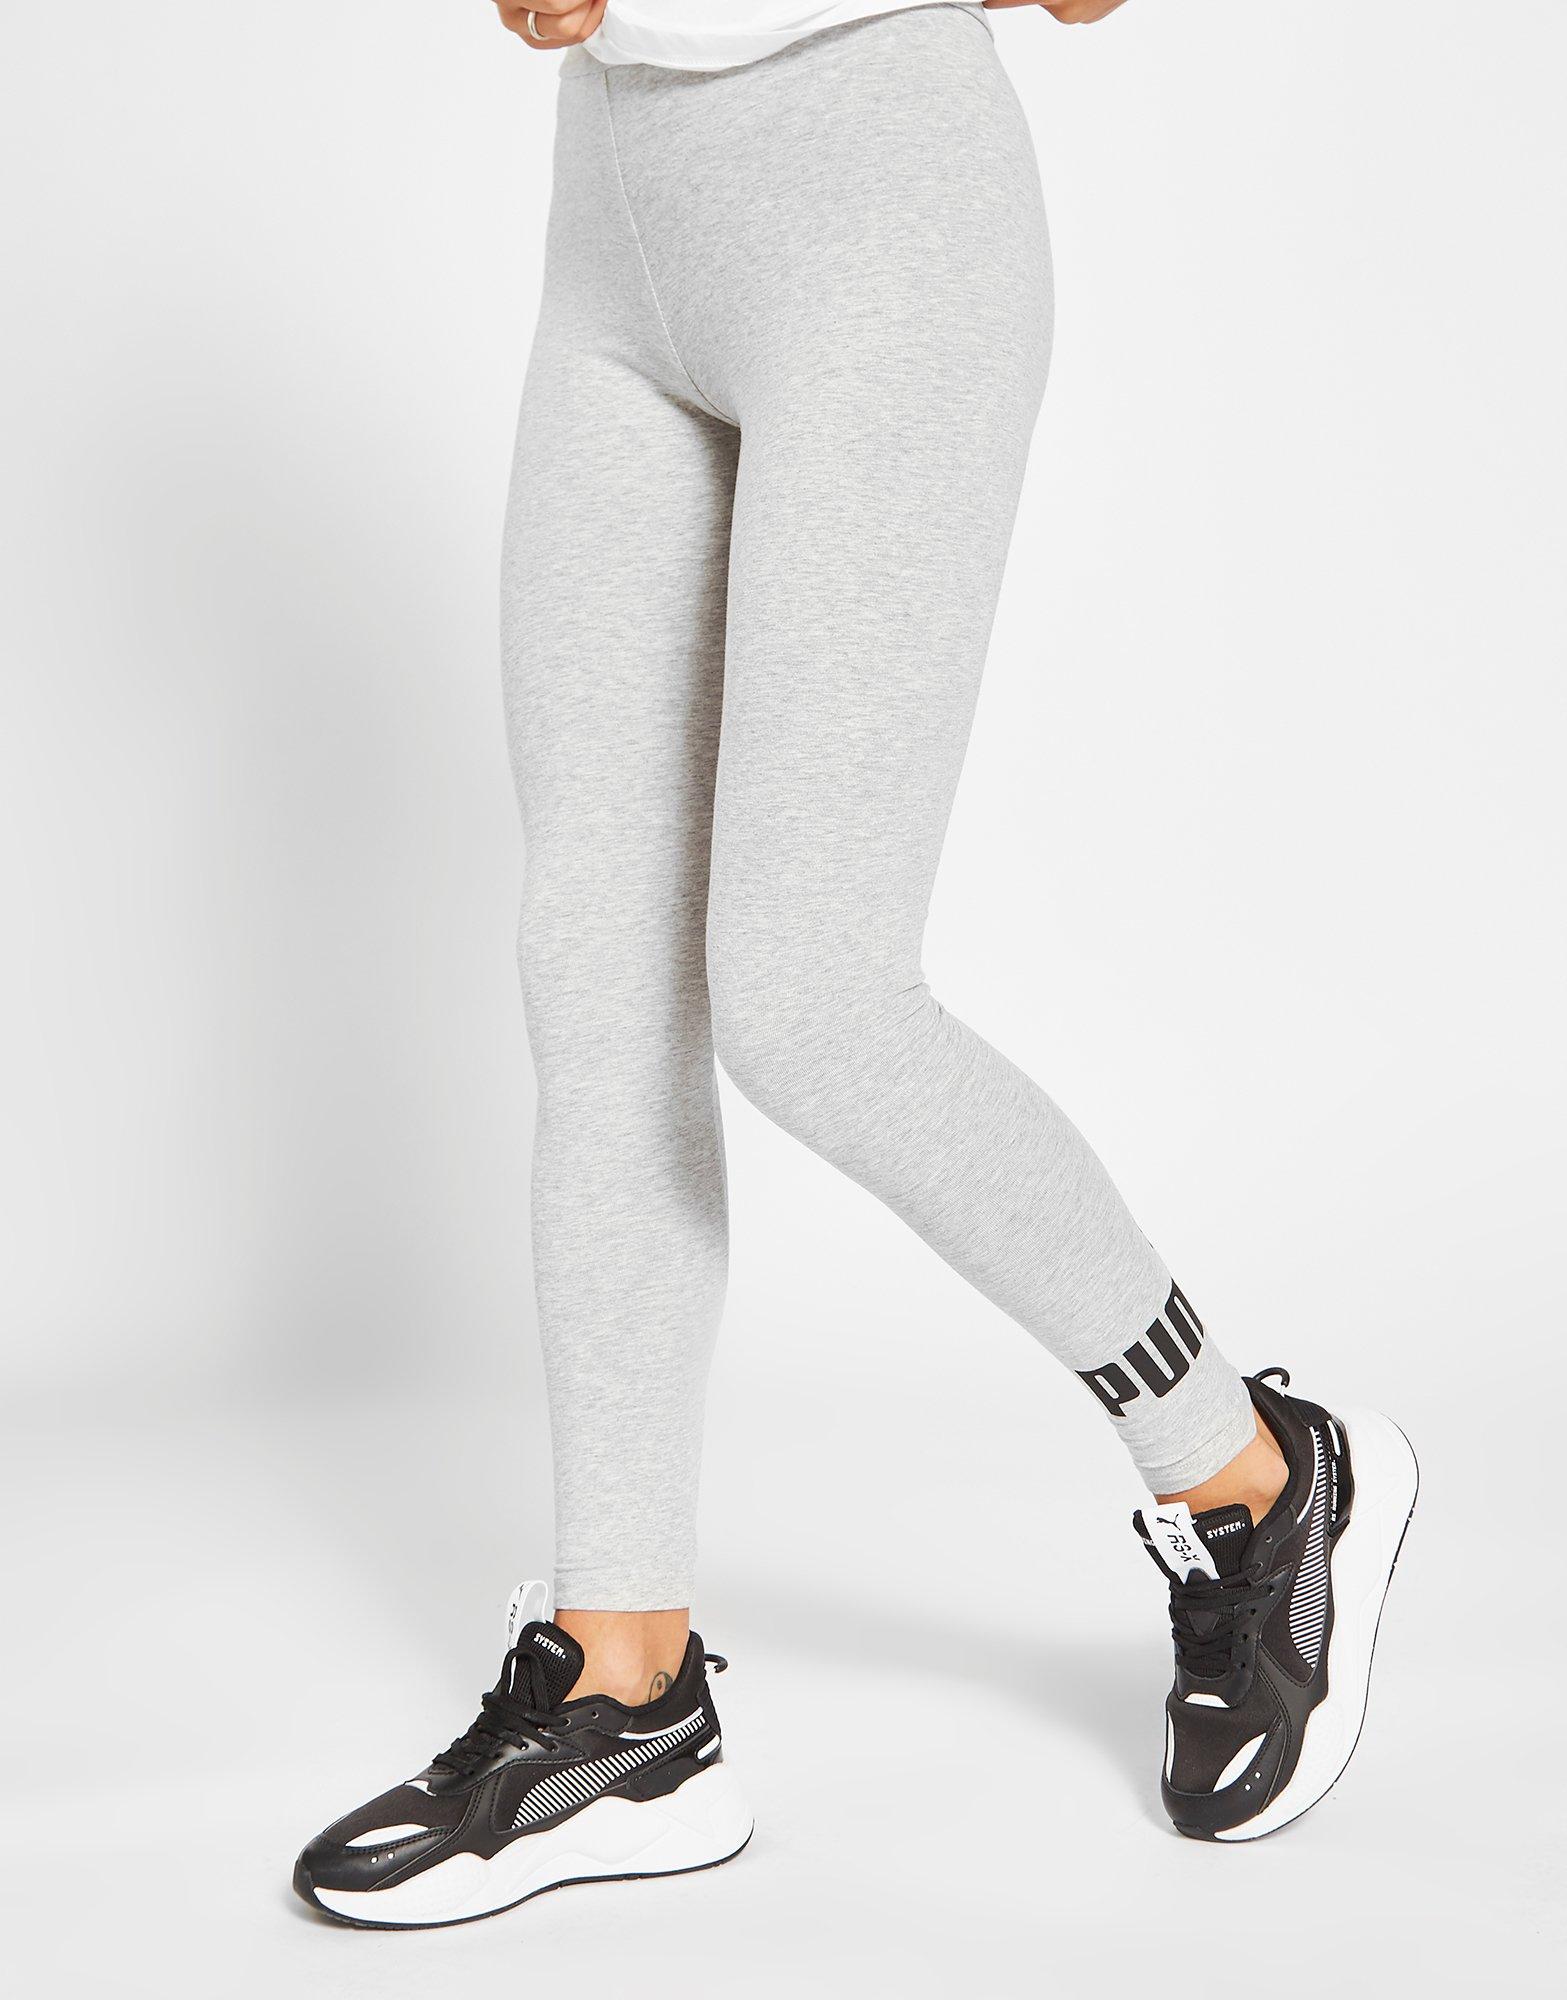 grey puma leggings